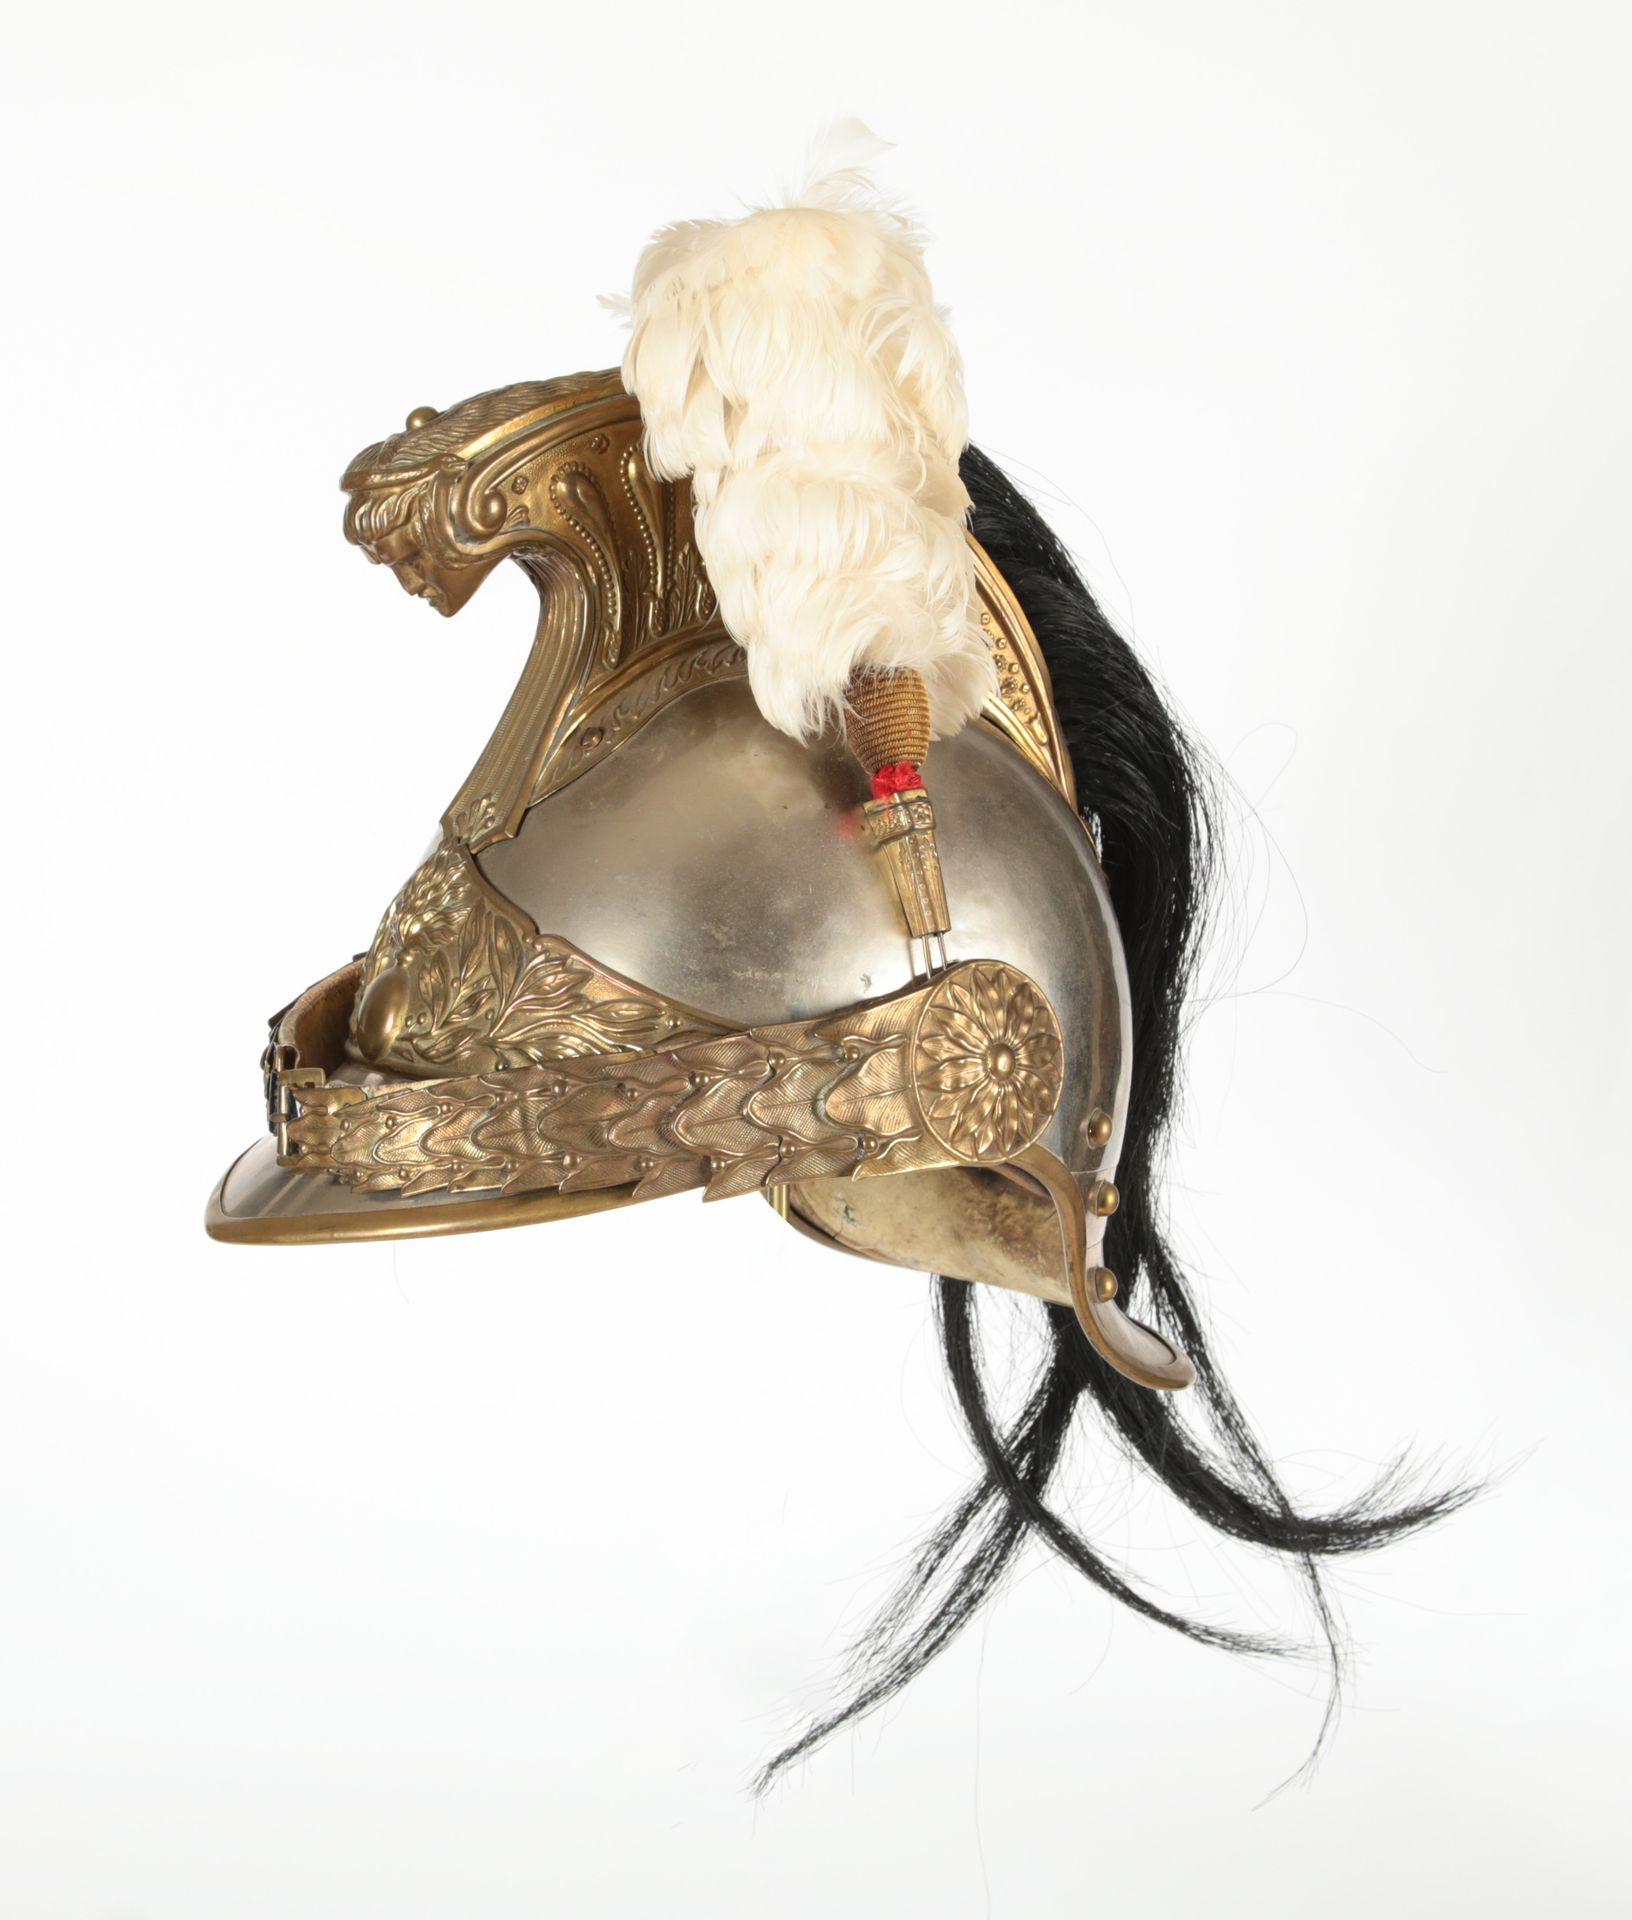 A French Model 1874 Cuirassier Helmet 一顶法国1874年式的魁尔斯头盔 
共和国卫队的头盔，有钢制的头骨和高高的青铜梳子，&hellip;